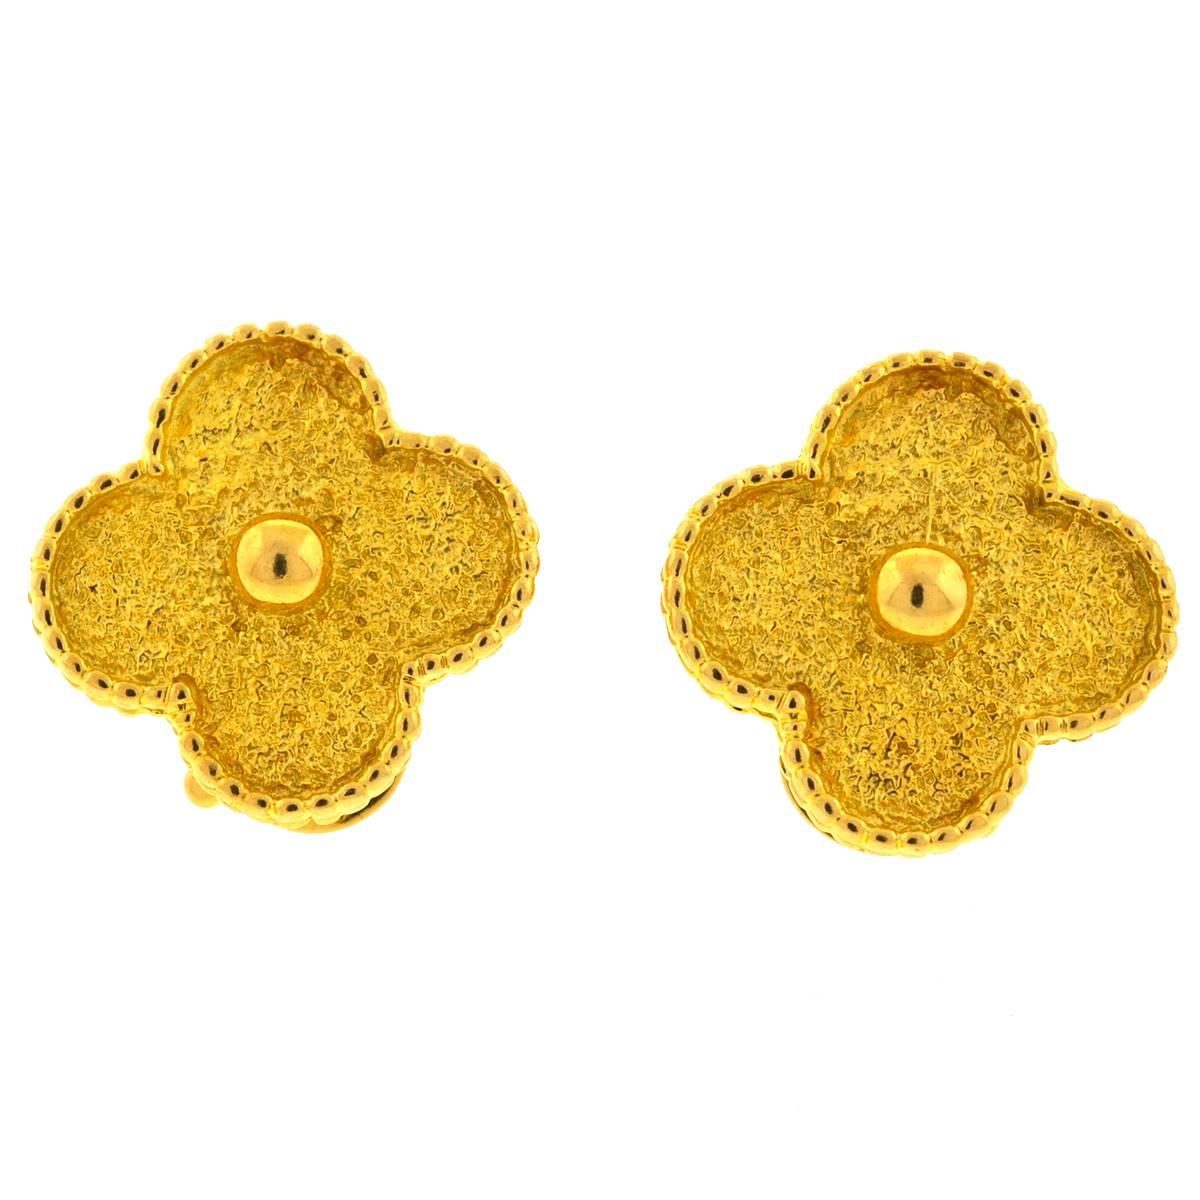 Company - Van Cleef & Arpels
Style - Vintage Alhambra Stud Earrings
Metal - 18k Yellow Gold
Weight / Size - 13.3 grams - .75